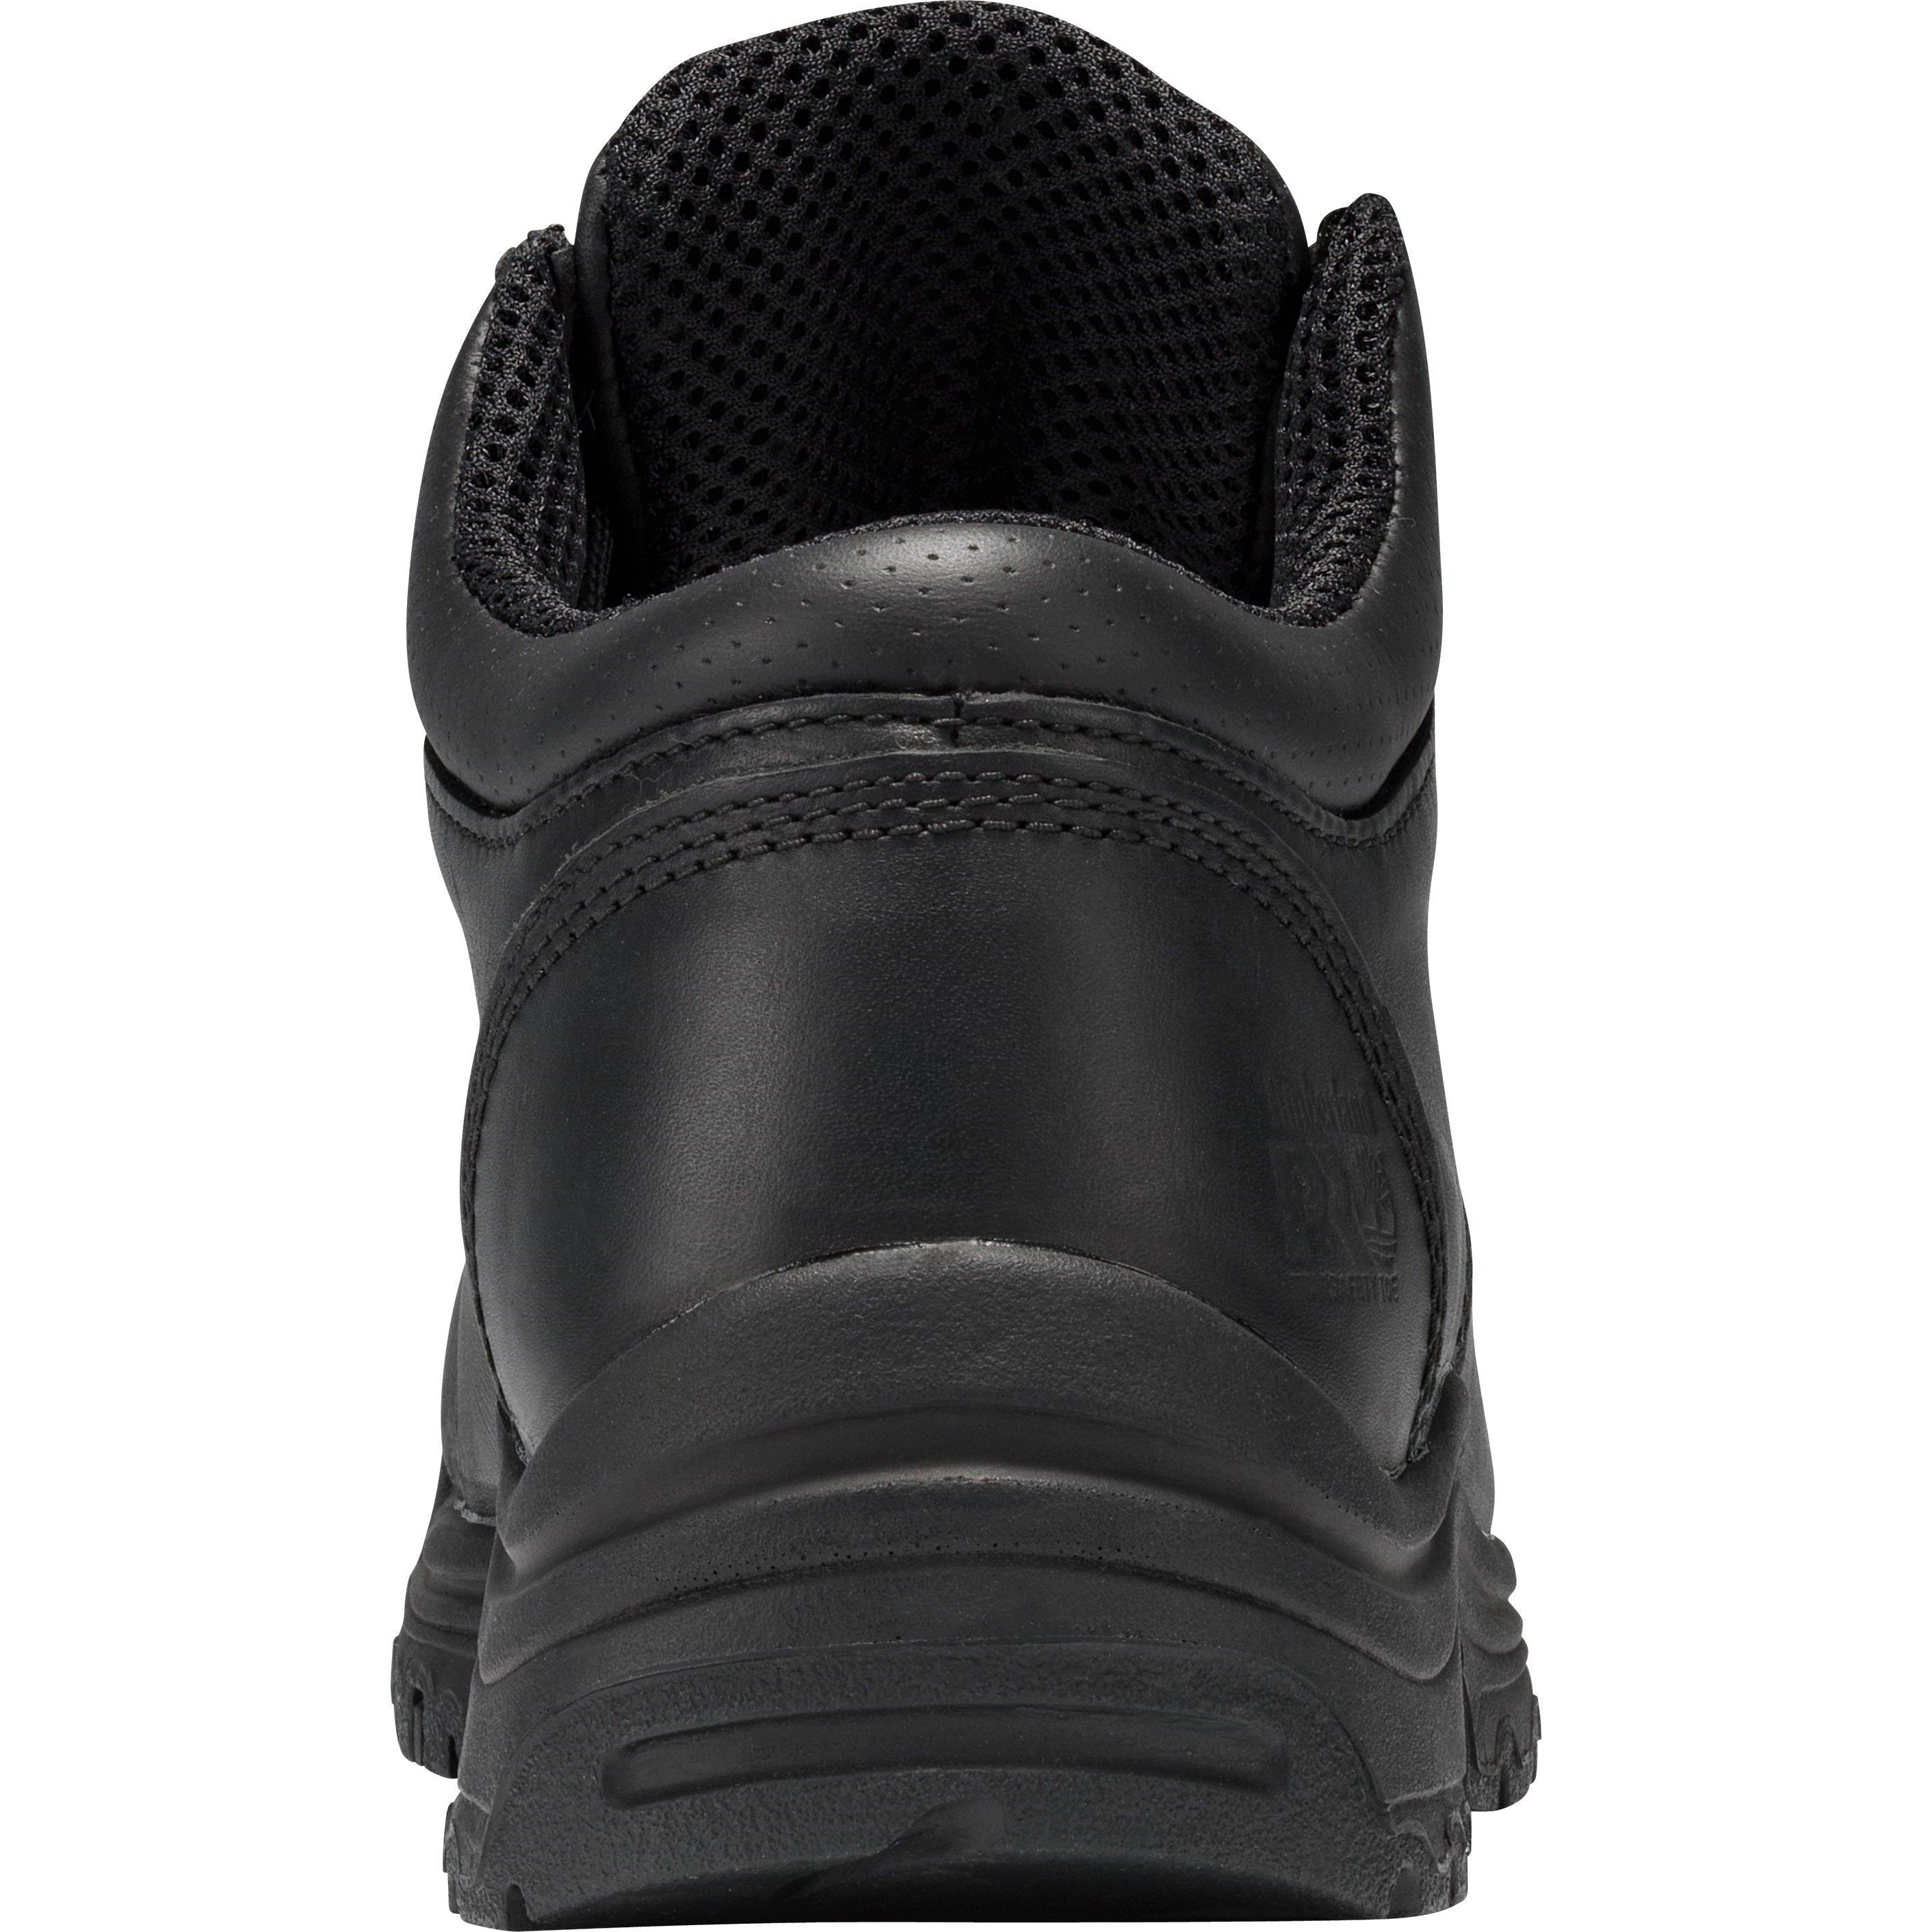 Timberland PRO Men's TiTAN Oxford Alloy Toe Work Shoe Black TB140044001  - Overlook Boots